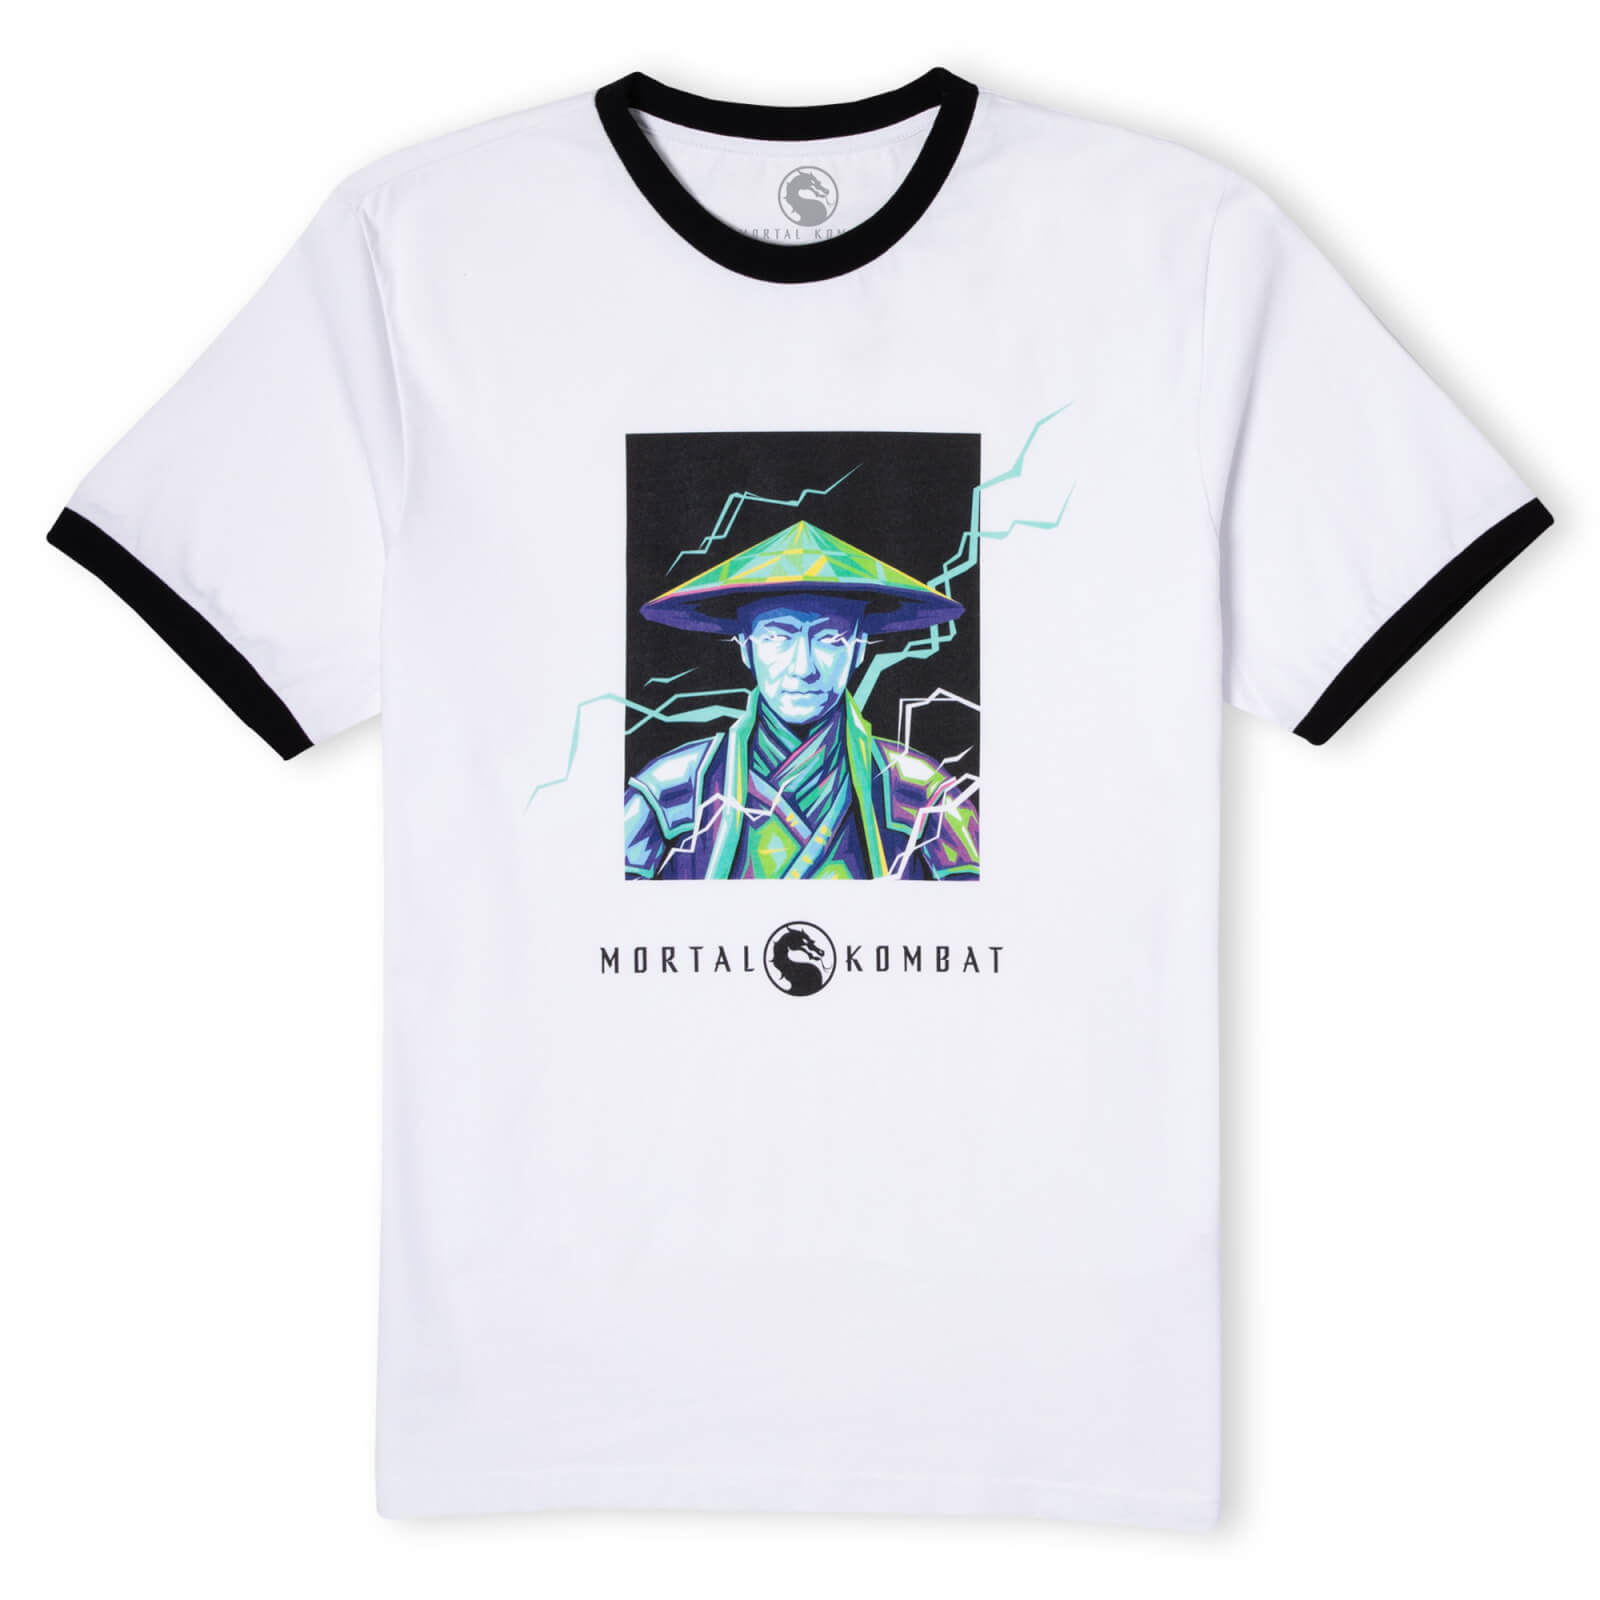 Mortal Kombat Raiden Unisex Ringer T-Shirt - White/Black - XS - White